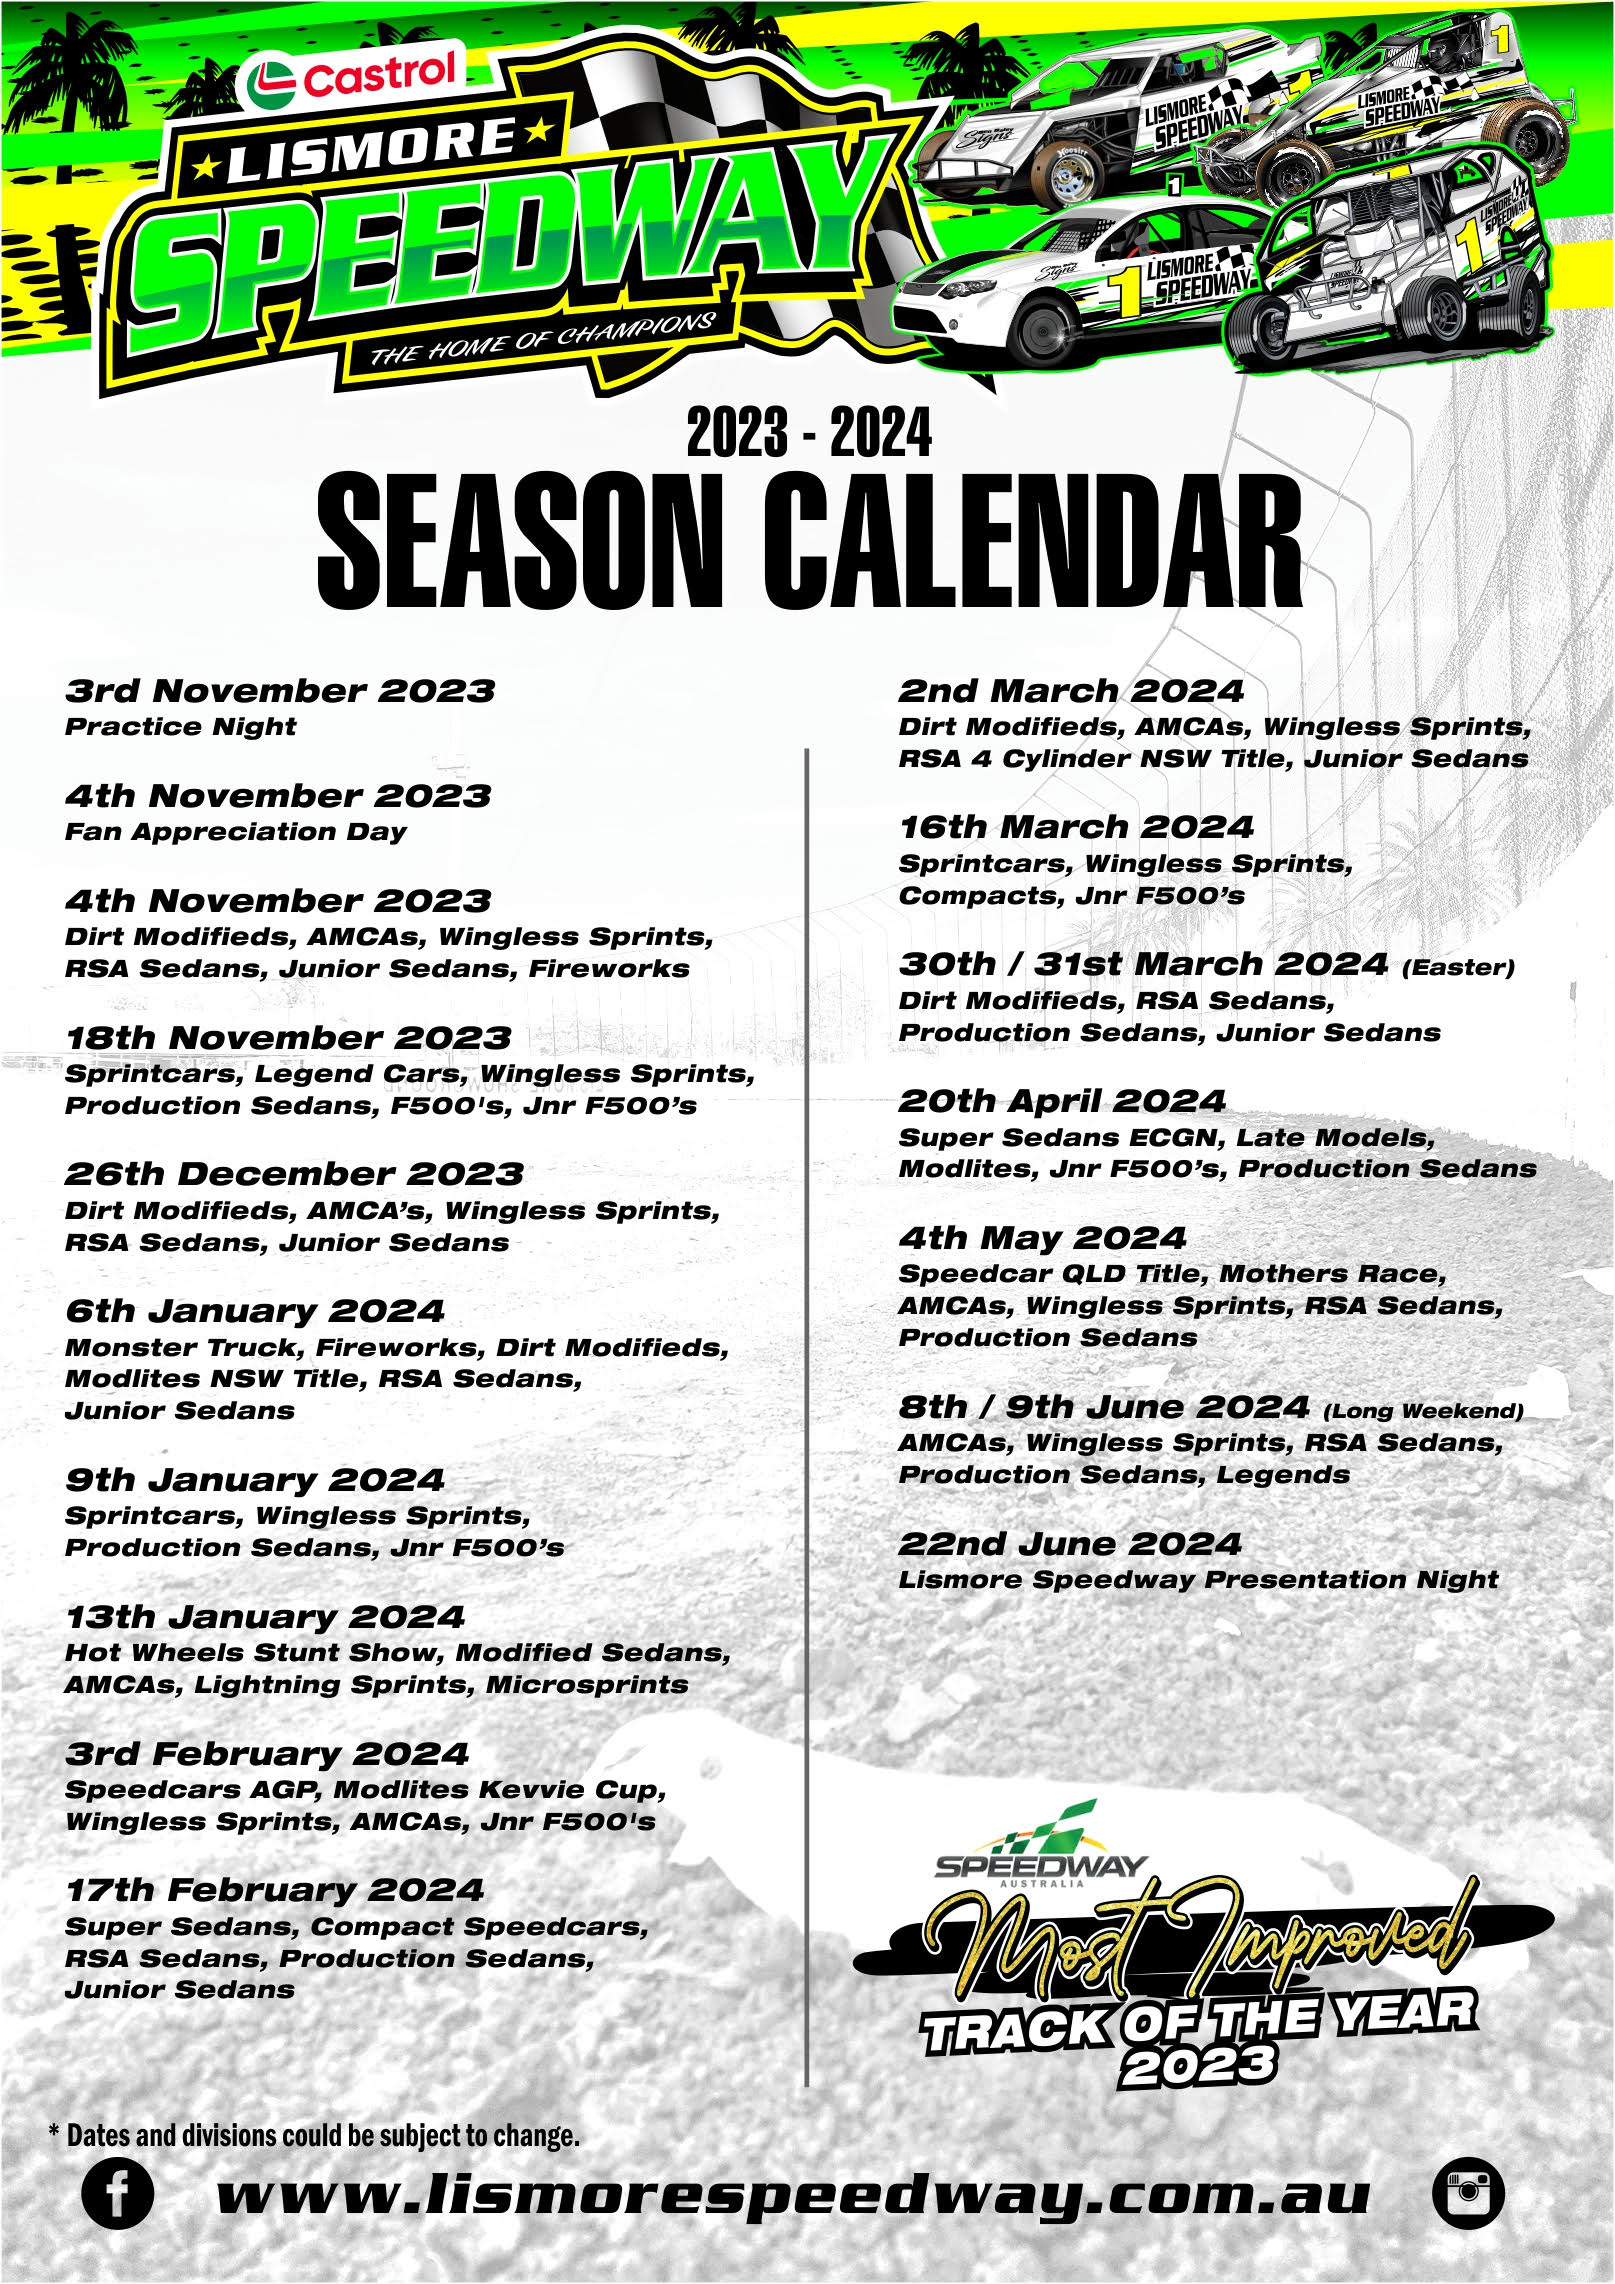 Season Calendar Lismore Speedway